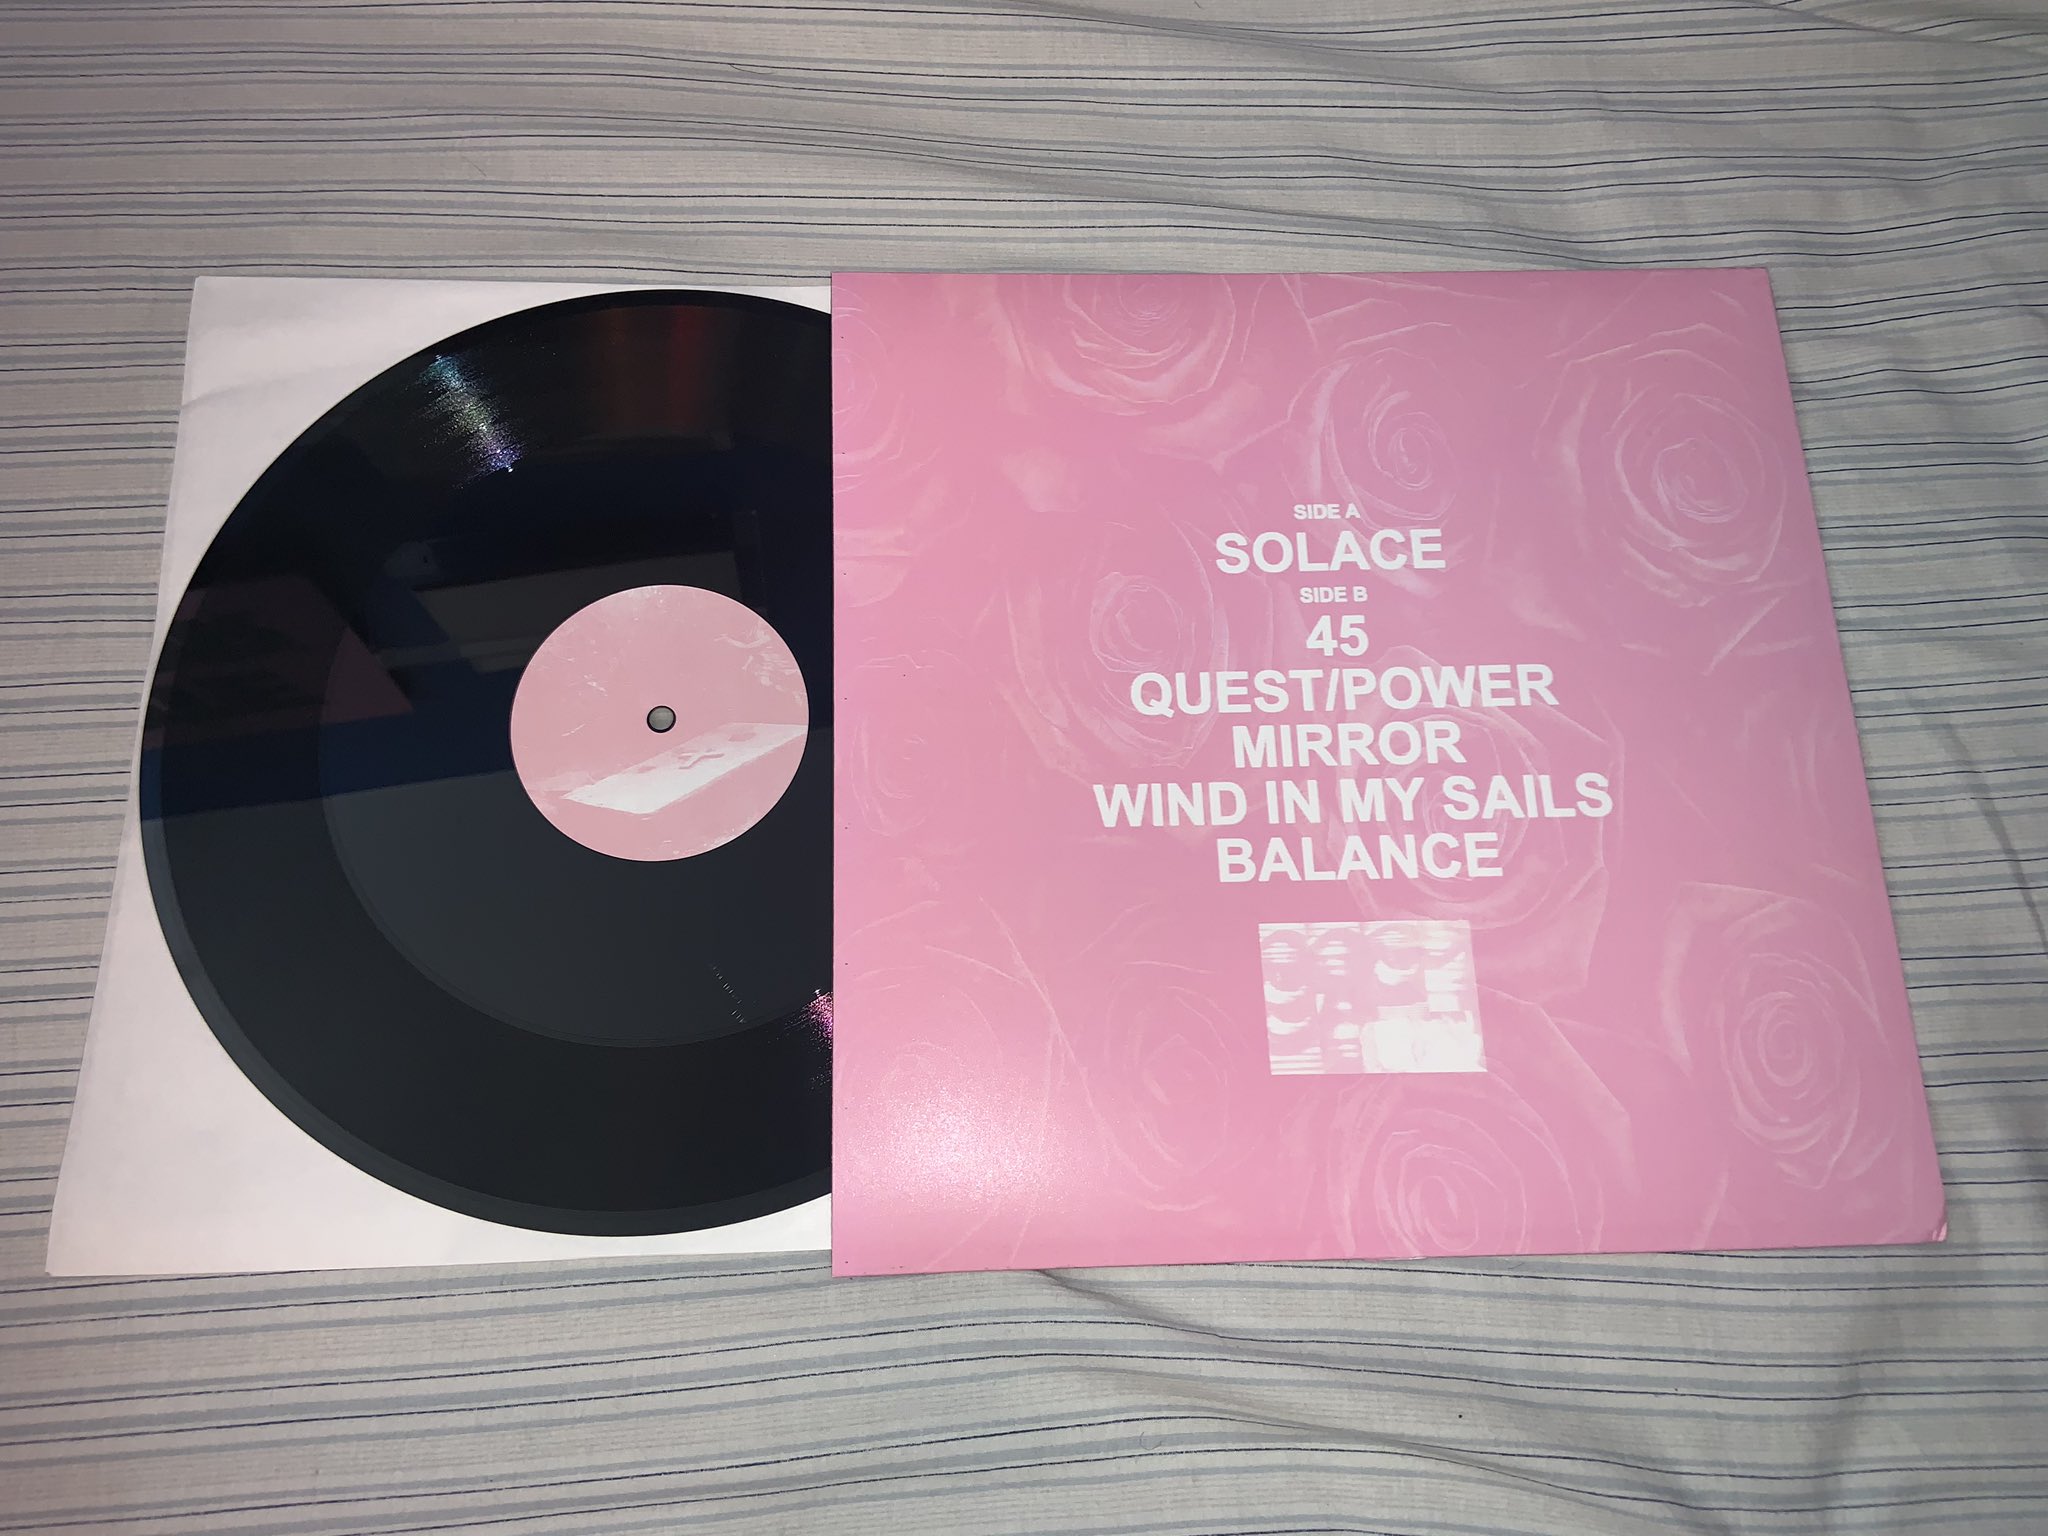 Slid Inspicere Bonus recede🥳BLOOM OUT NOW!🥀 on Twitter: "Earl Sweatshirt - Solace (Bootleg  Vinyl) (Link in comments) https://t.co/S0QAVwdtzz" / Twitter